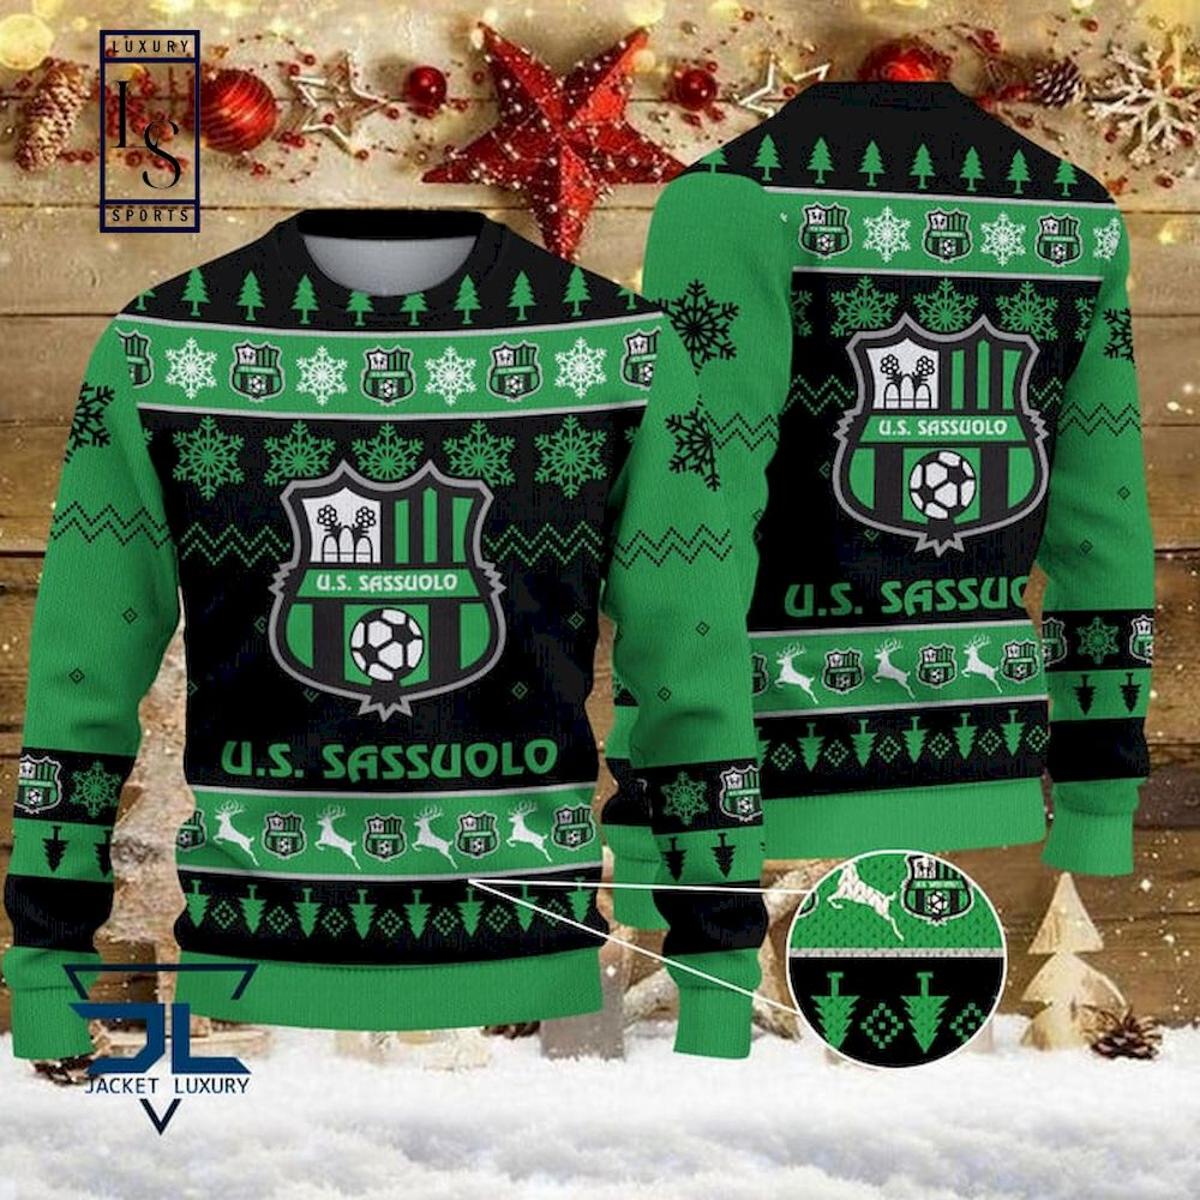 Us Salernitana Santa Hat Ugly Christmas Sweater For Men And Women